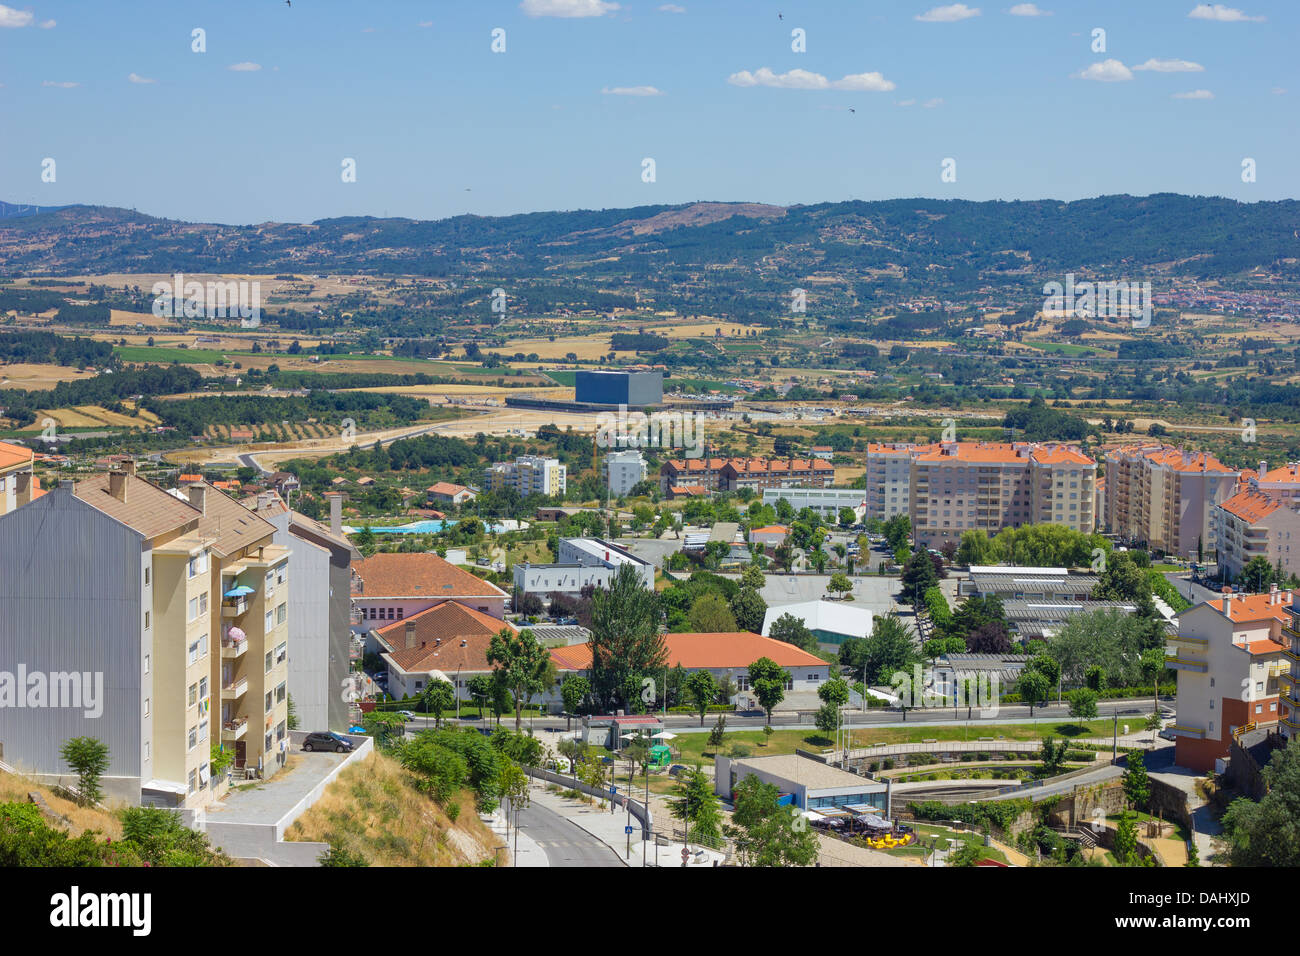 Covilhã landscape with Portugal Telecom Data center Stock Photo